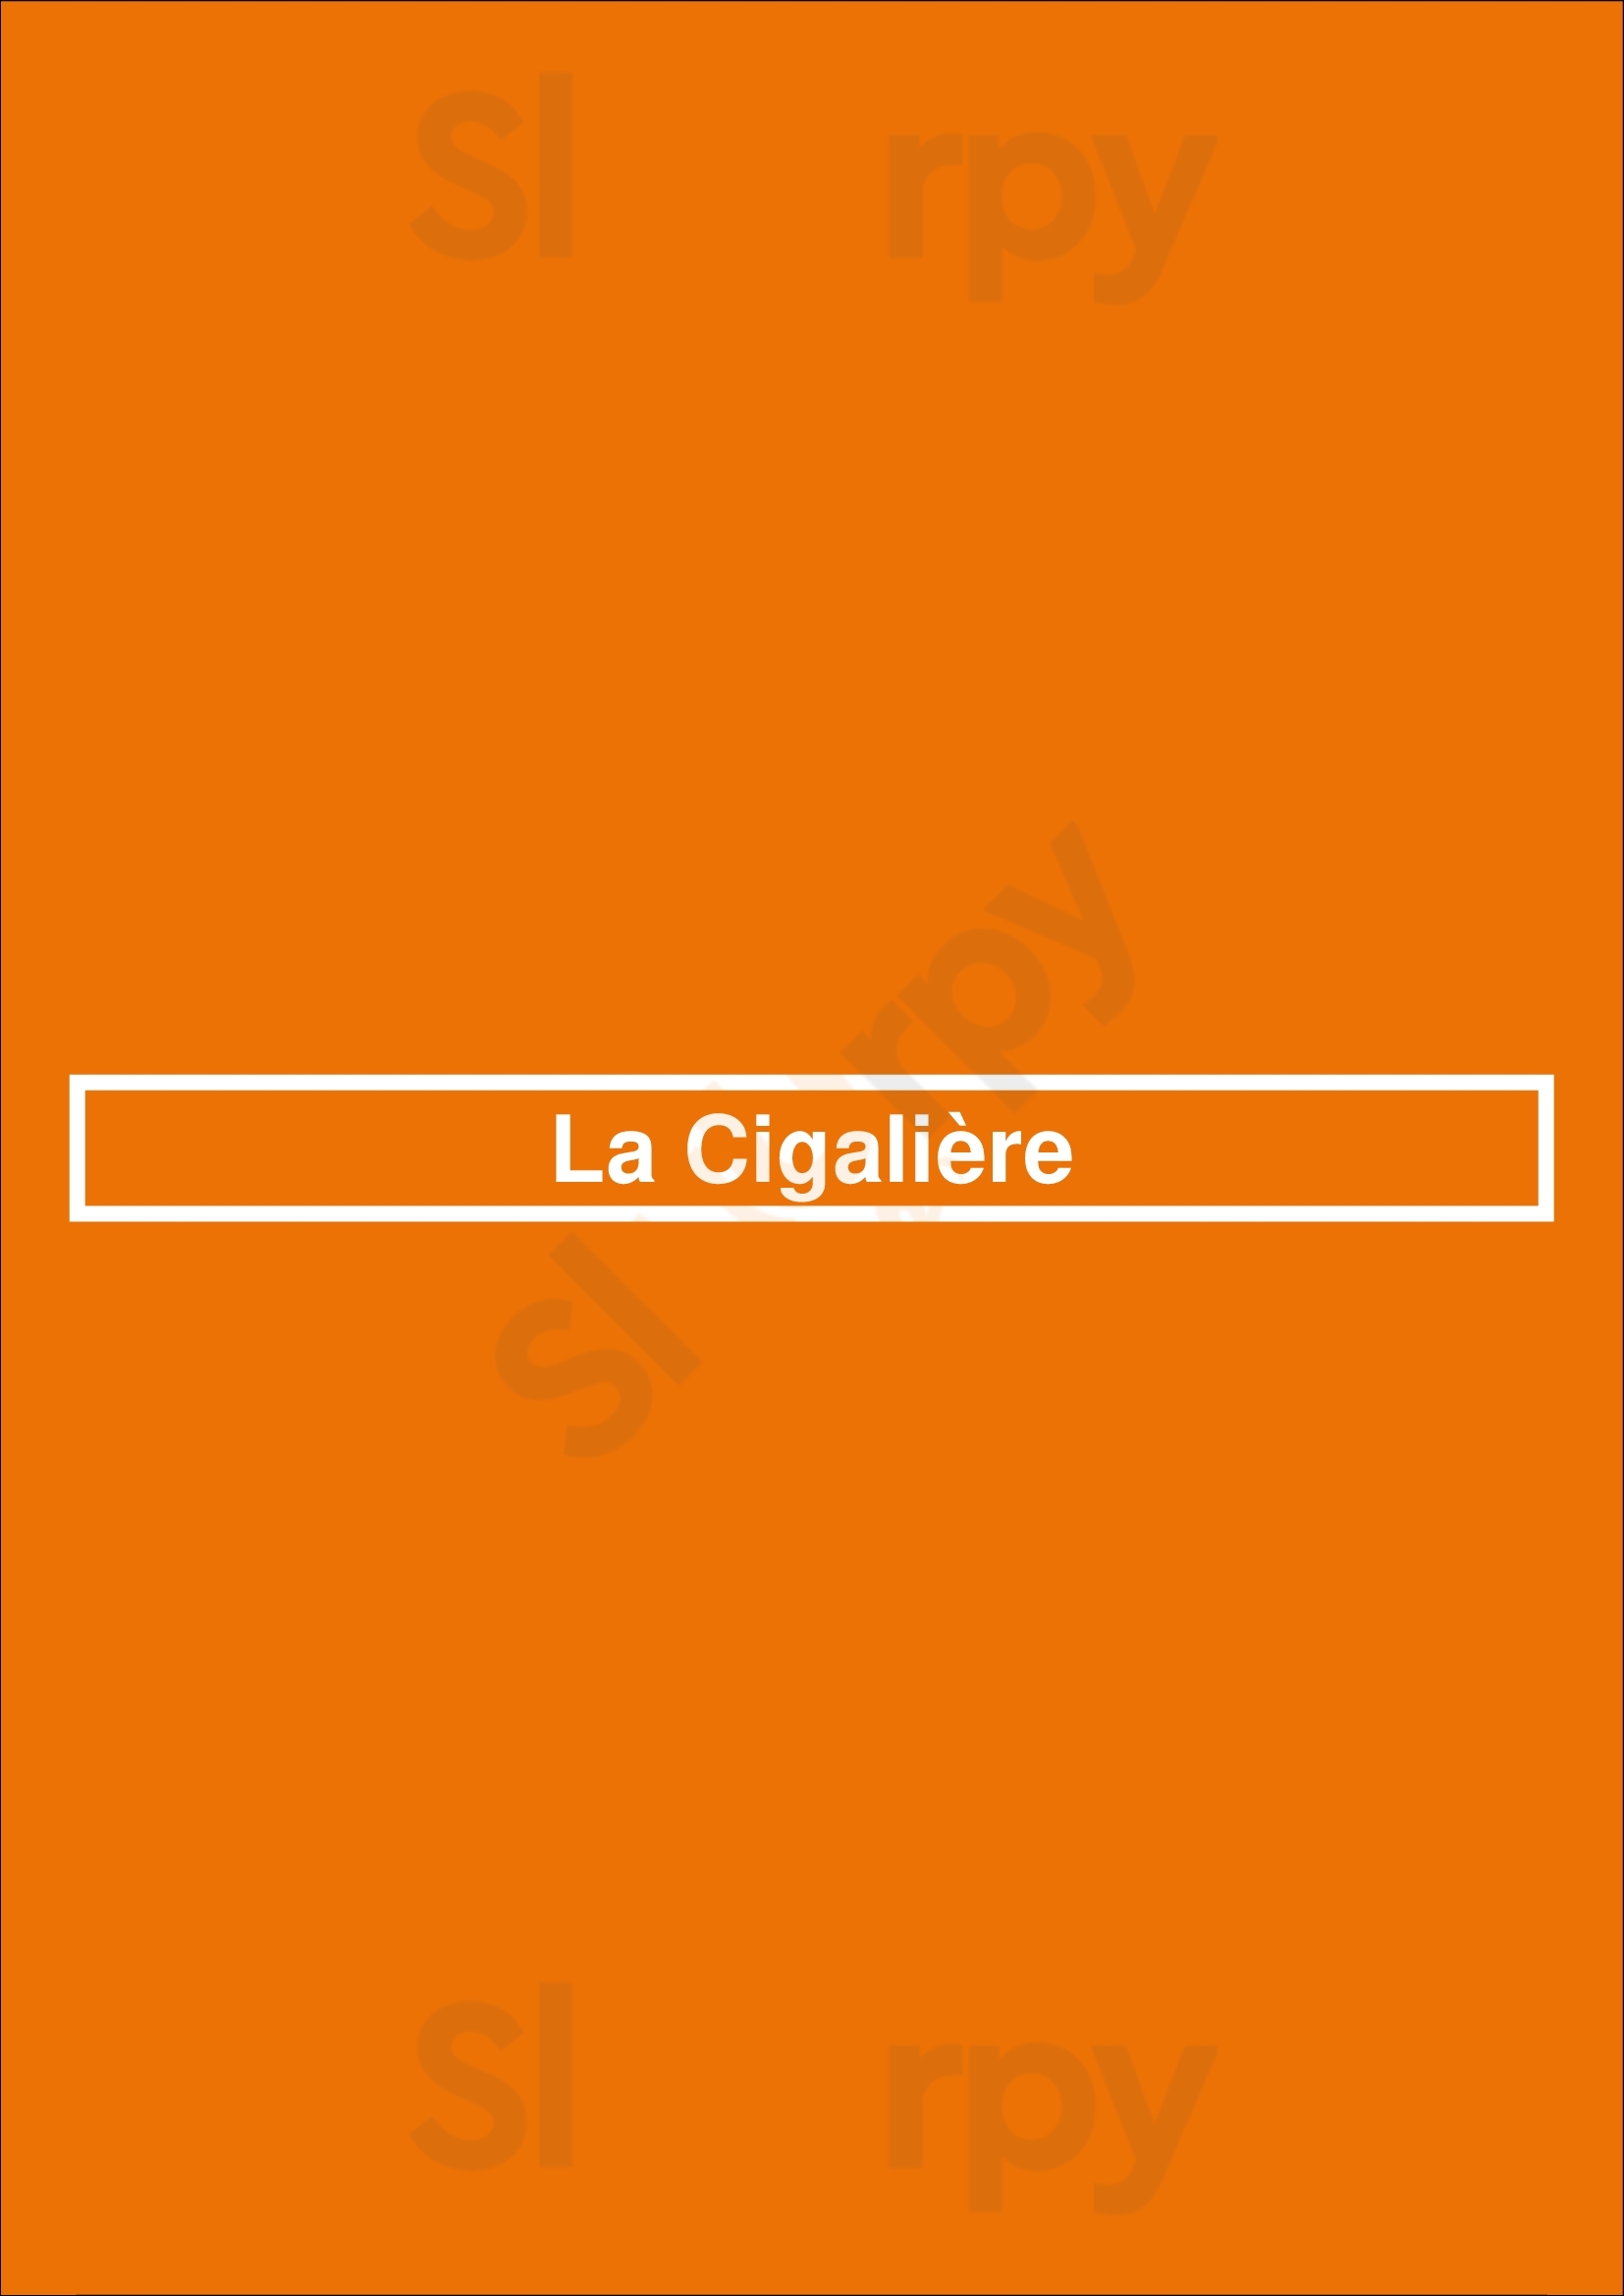 La Cigalière Liège Menu - 1